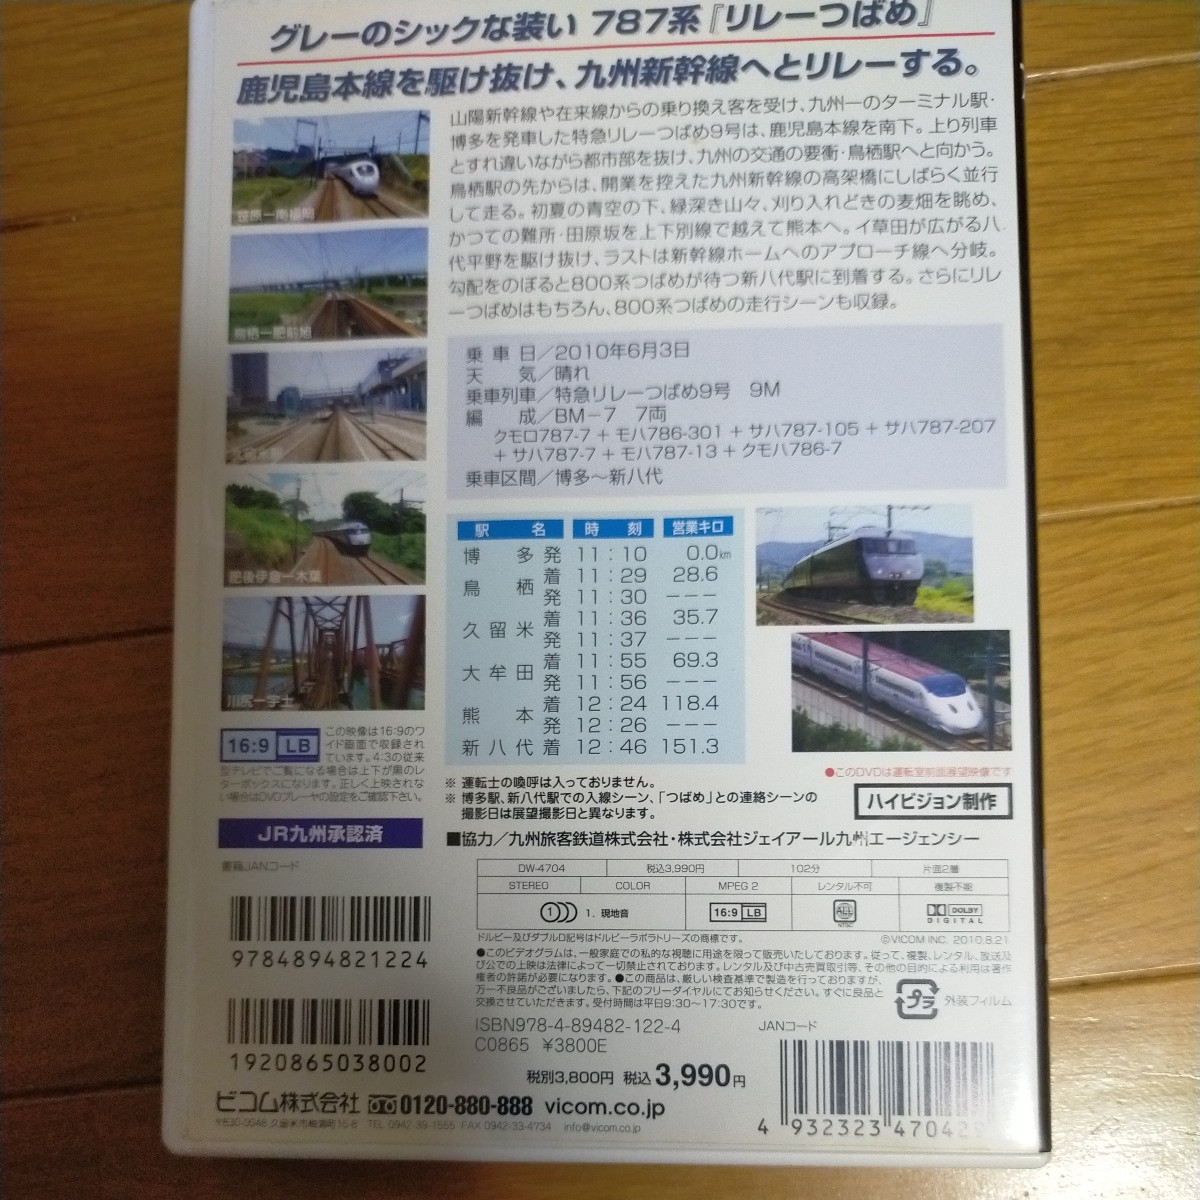 DVD 787系 特急リレーつばめ 博多〜新八代 ビコムワイド展望_画像2